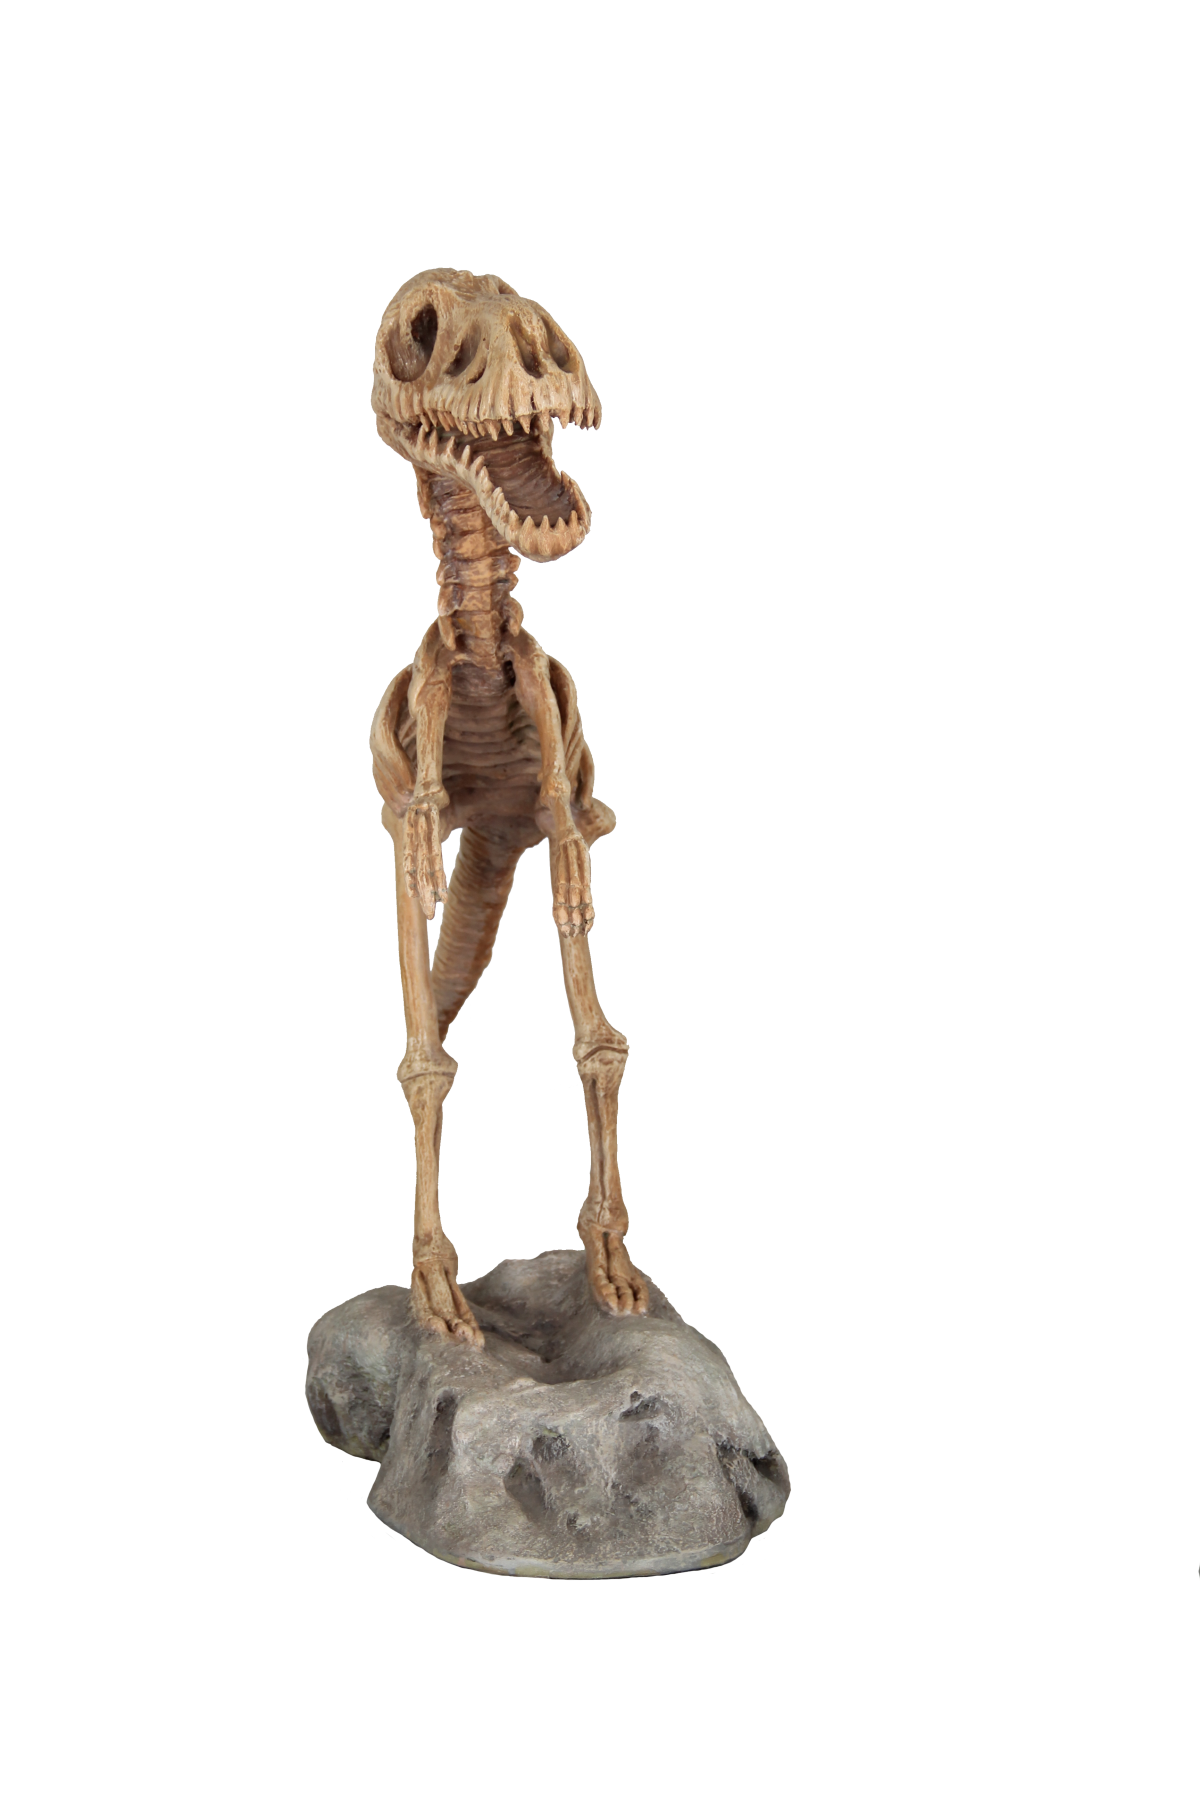 T-Rex skeleton on platform